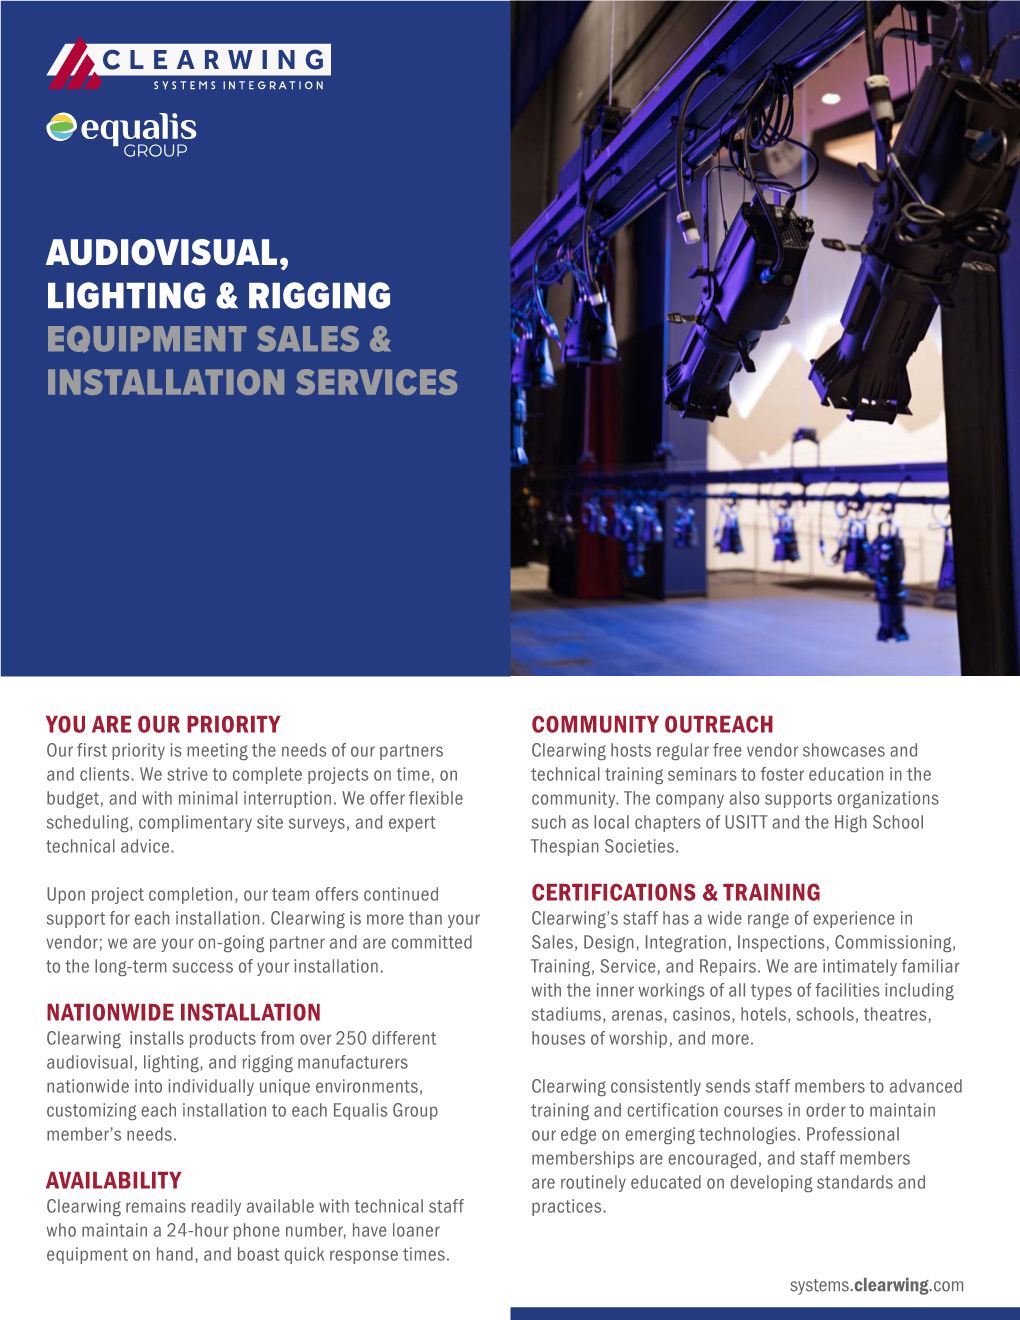 Audiovisual, Lighting & Rigging Equipment Sales